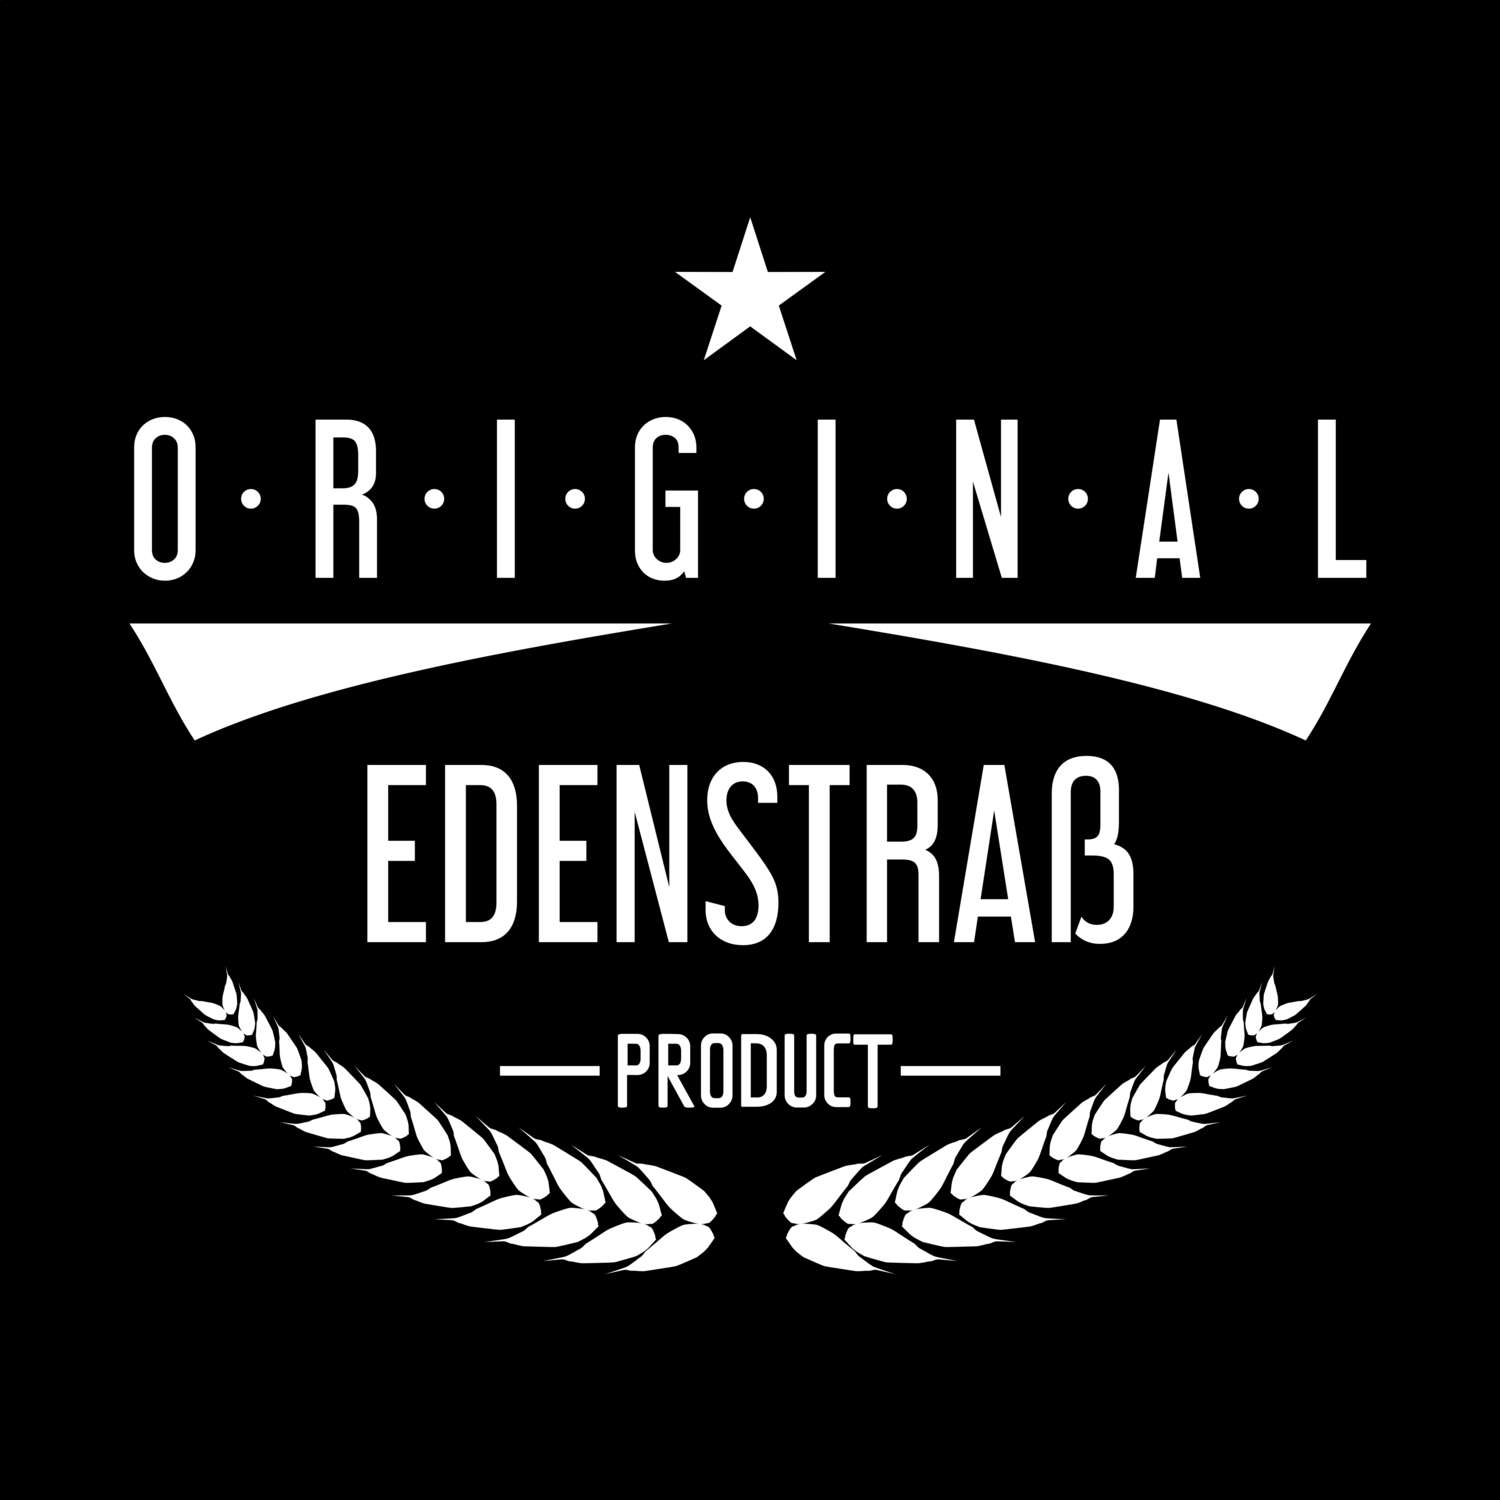 Edenstraß T-Shirt »Original Product«